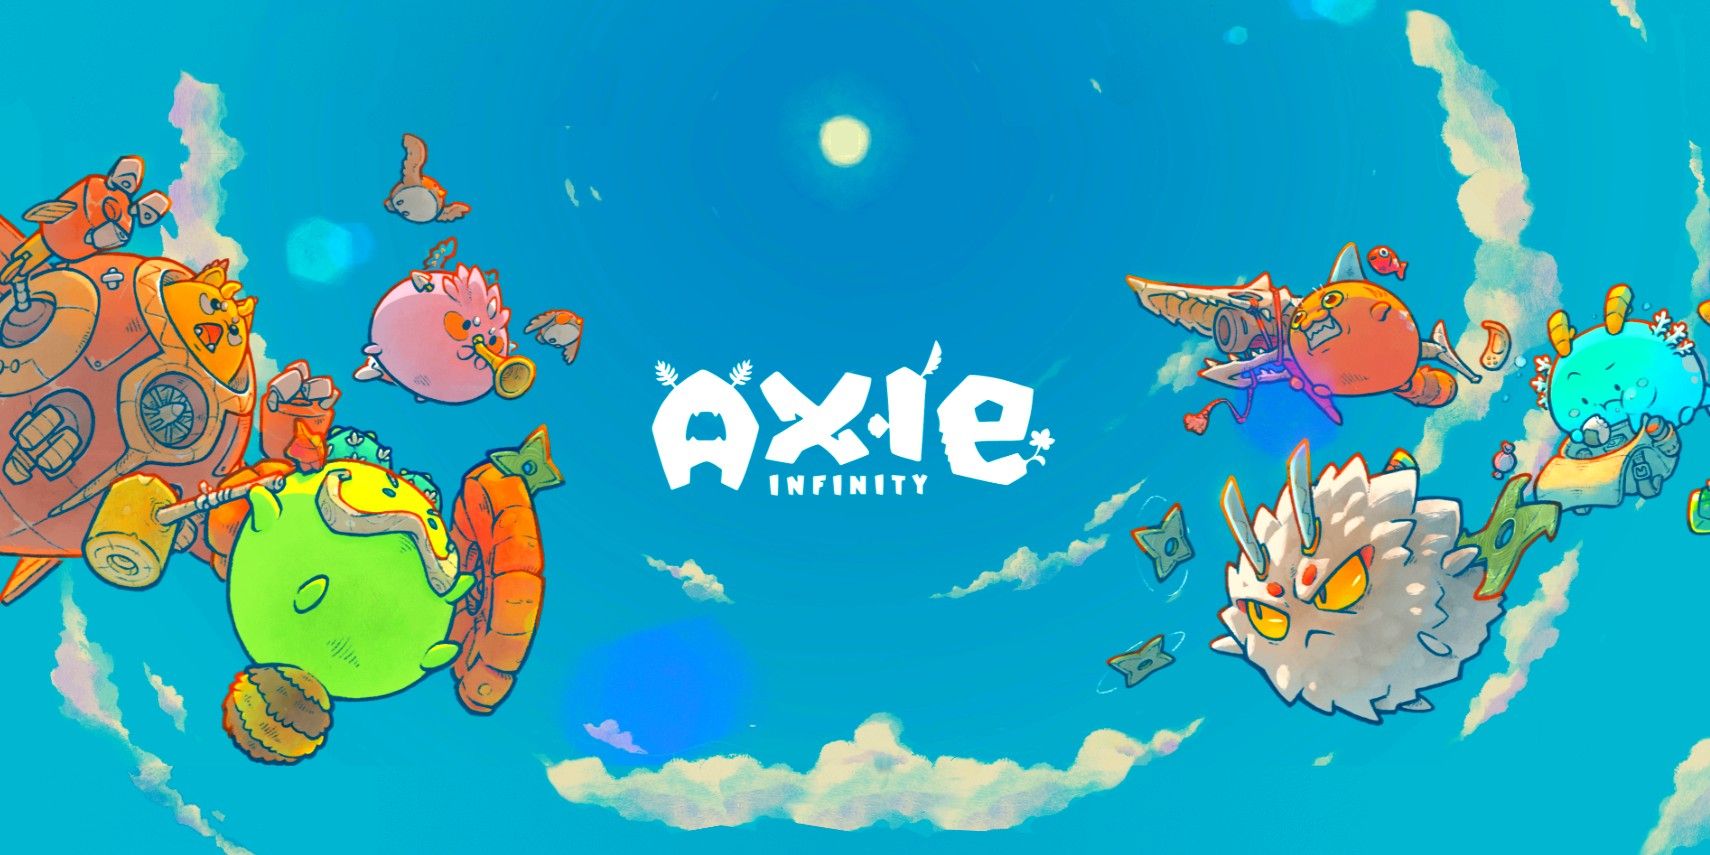 axie infinity genres